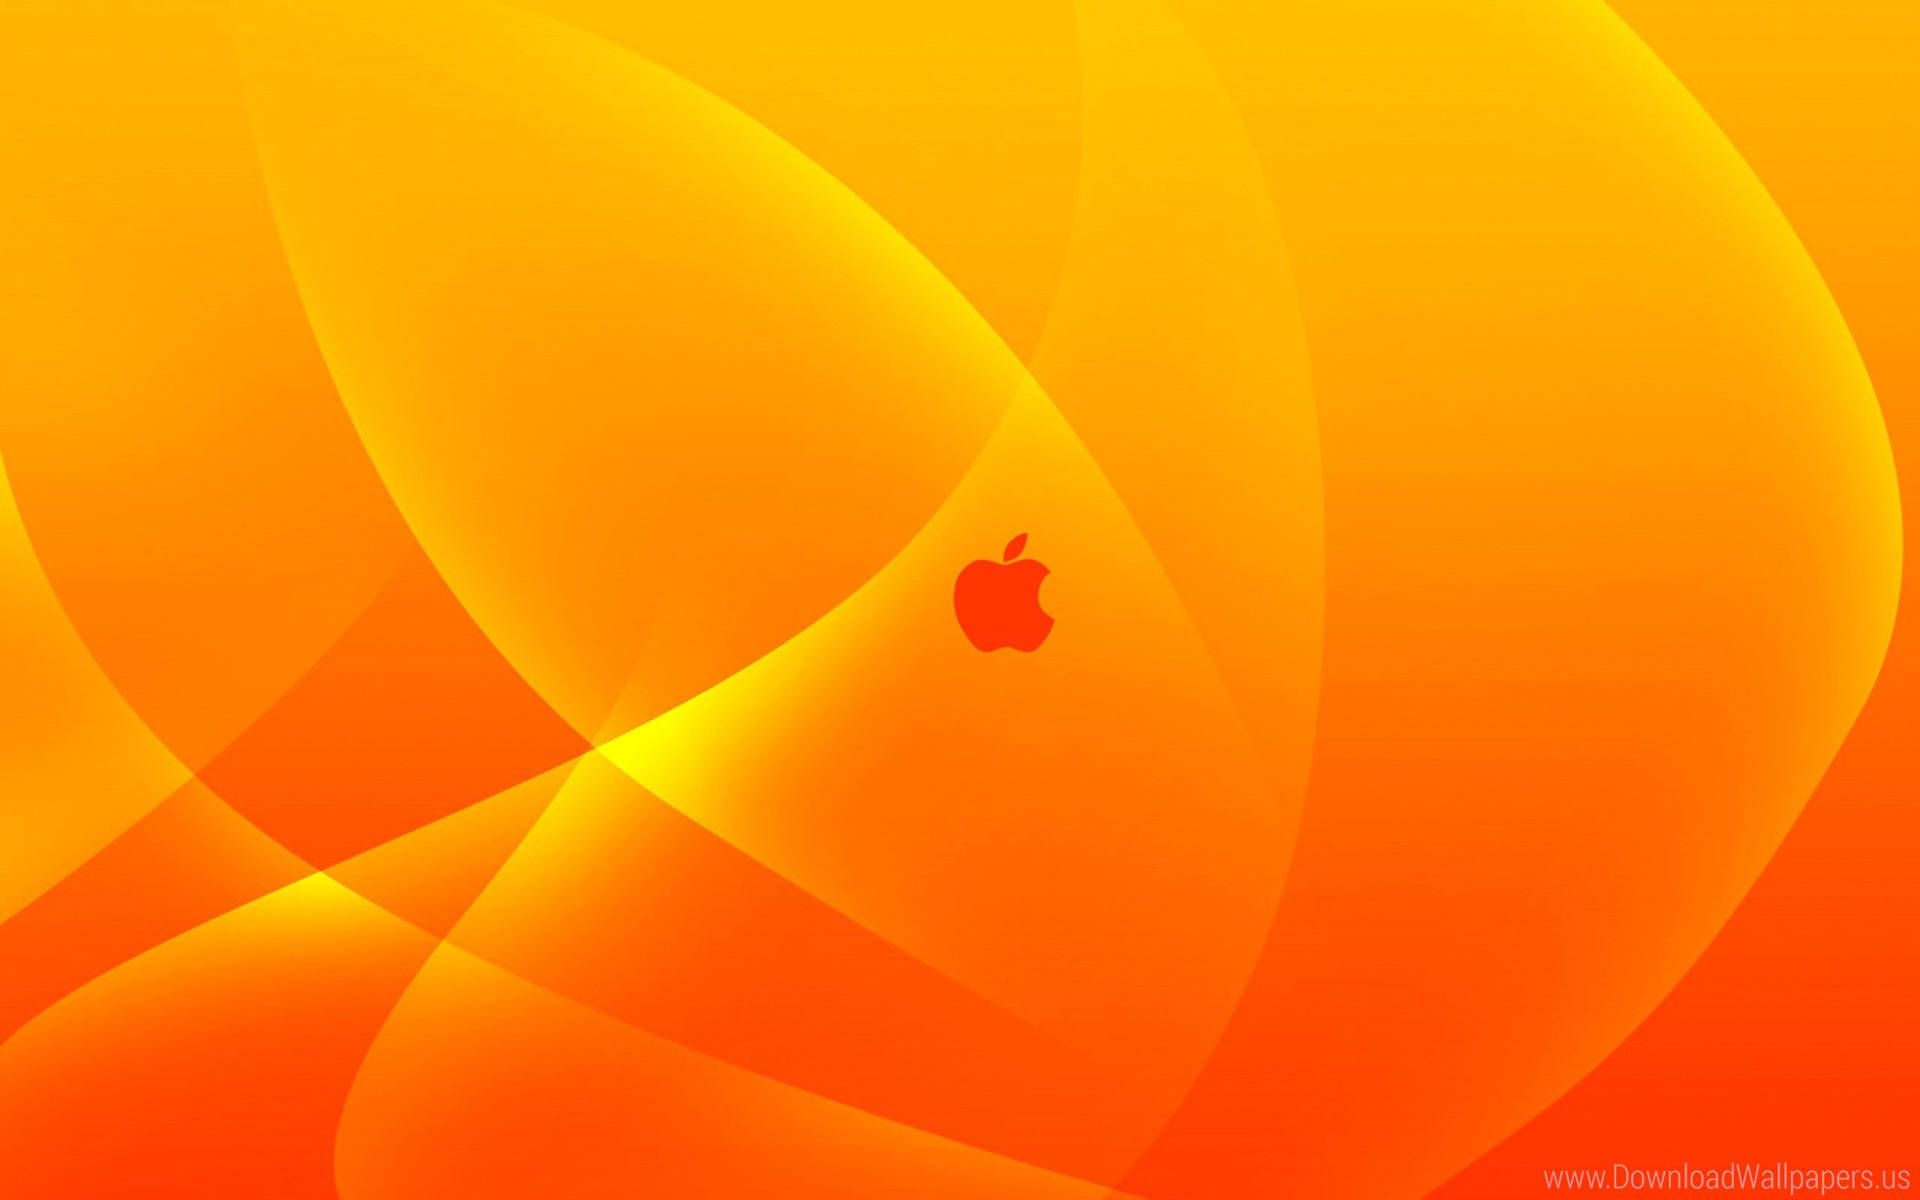 Apple Icon In Orange Cover Background